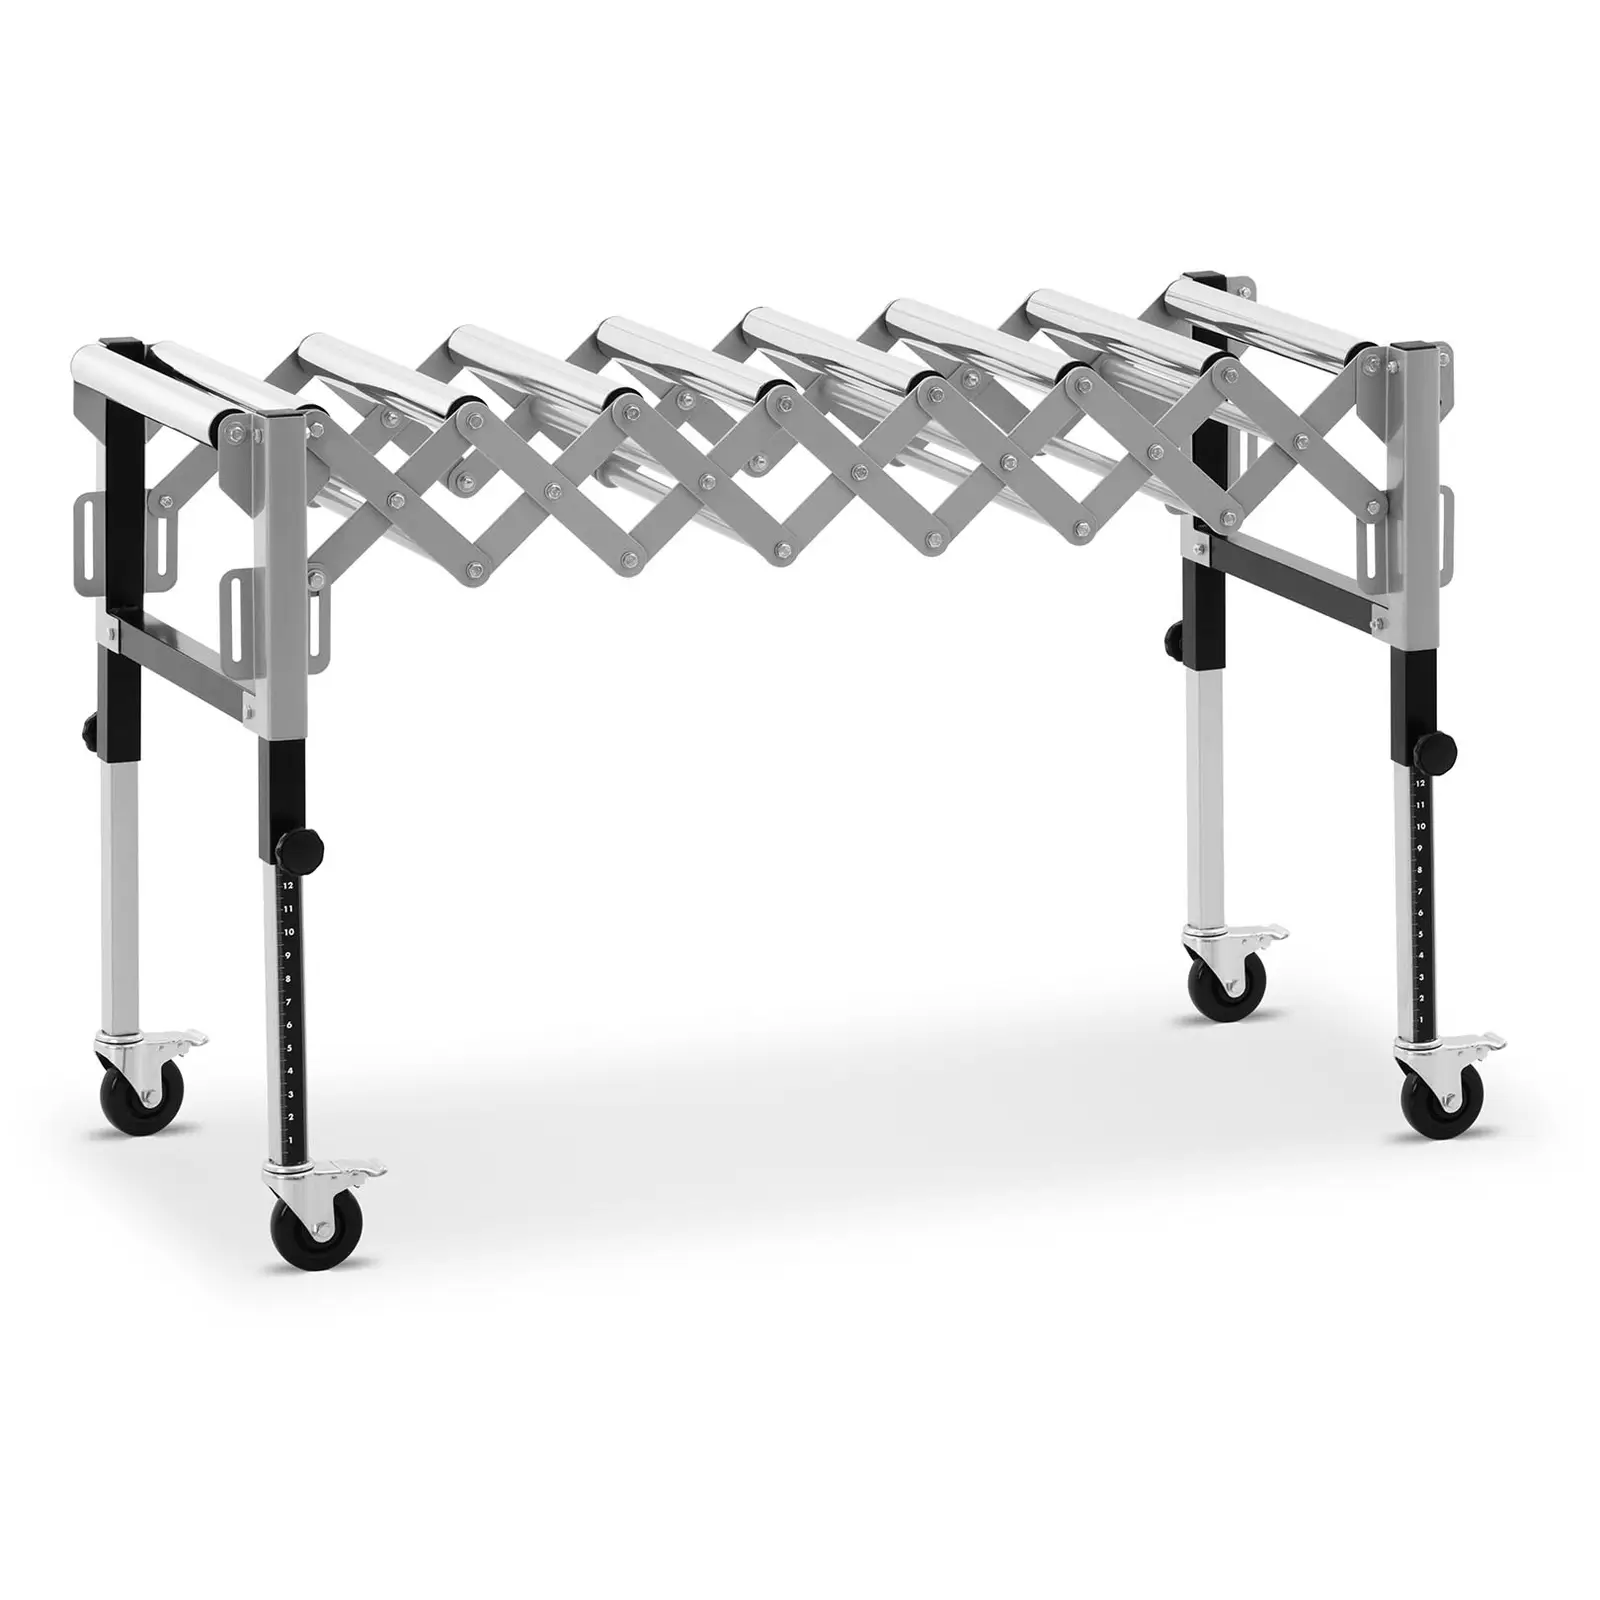 Rullebord - 130 kg - 147 cm - 9 ruller - sammenleggbar